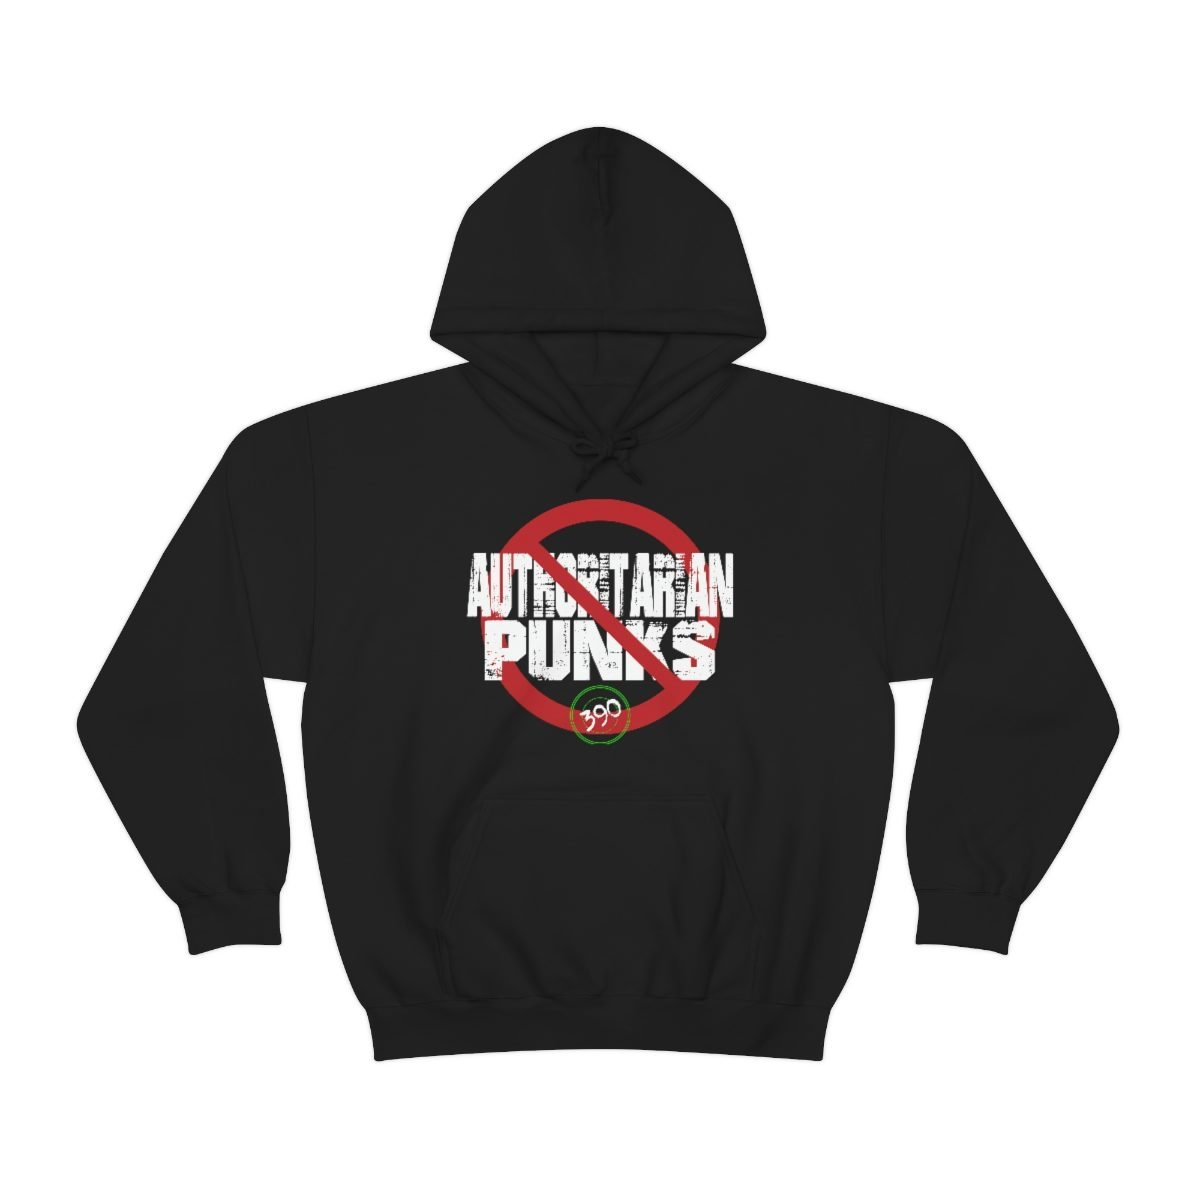 390 – No Authoritarian Punks Pullover Hooded Sweatshirt